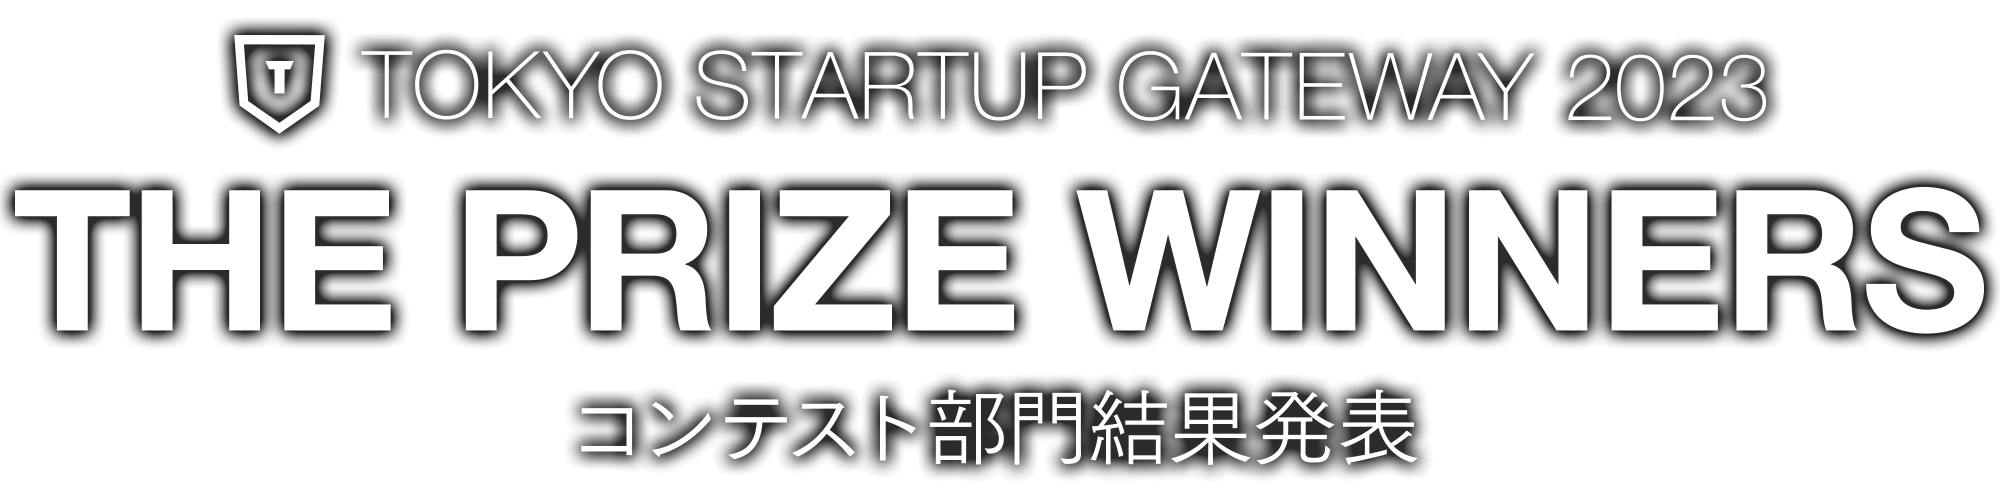 TOKYO STARTUP GATEWAY 2023 コンテスト部門 結果発表